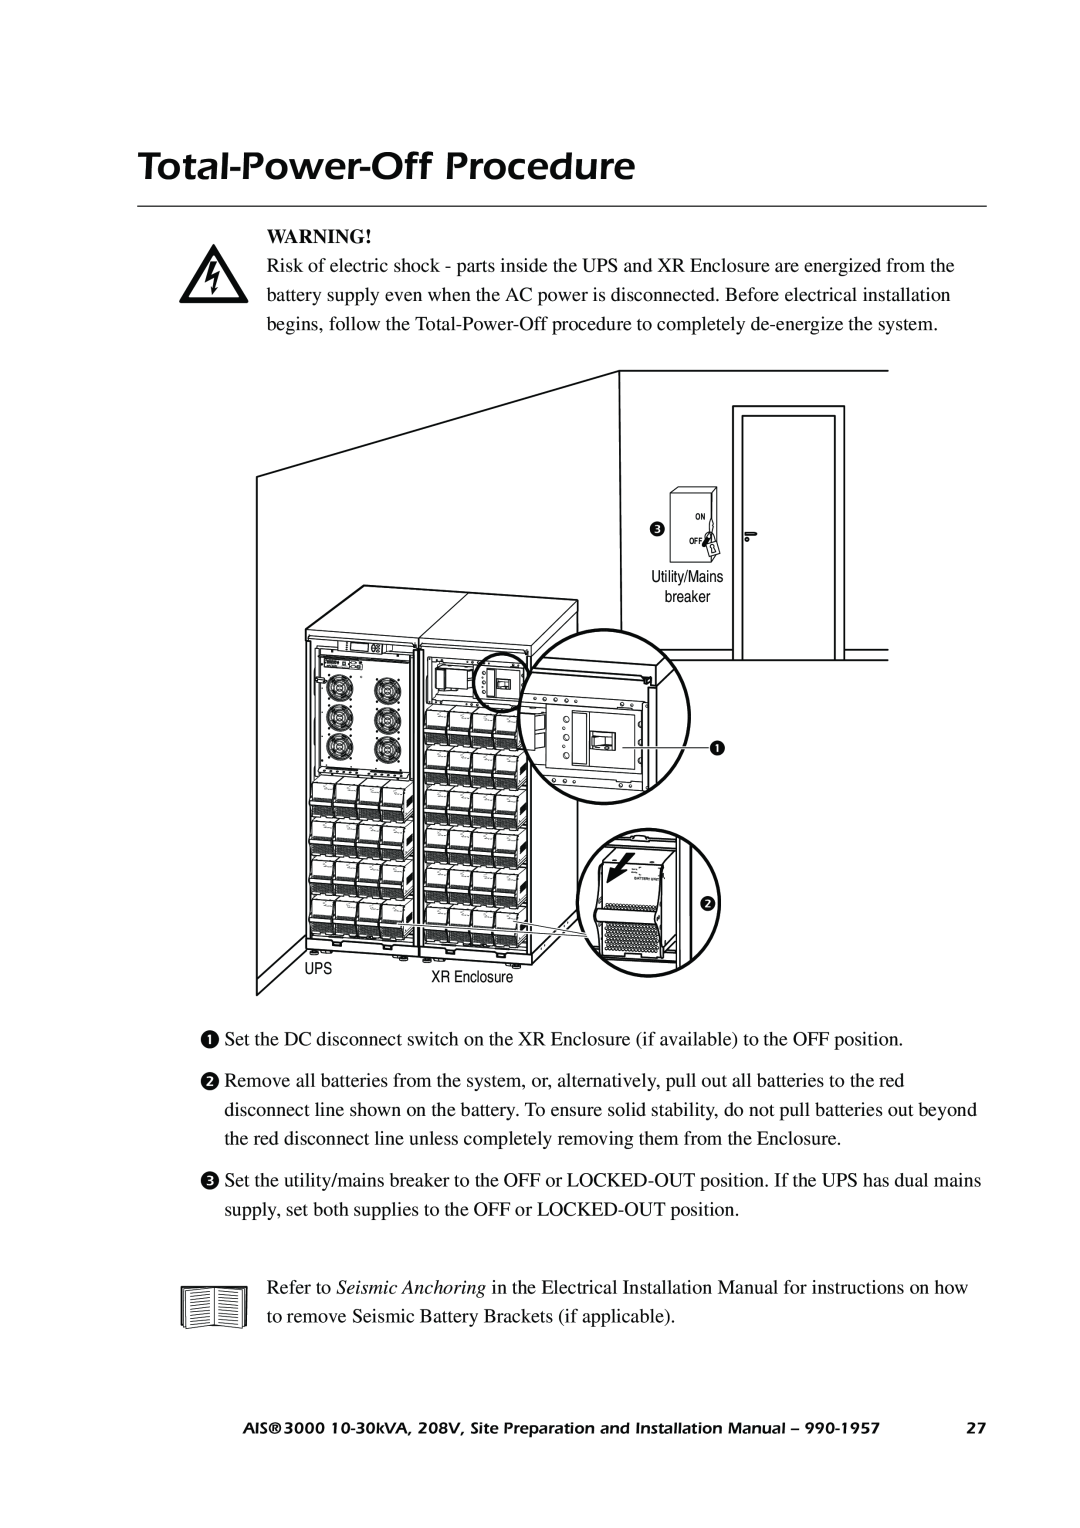 APC 3000 installation manual Total-Power-Off Procedure, Utility/Mains breaker 